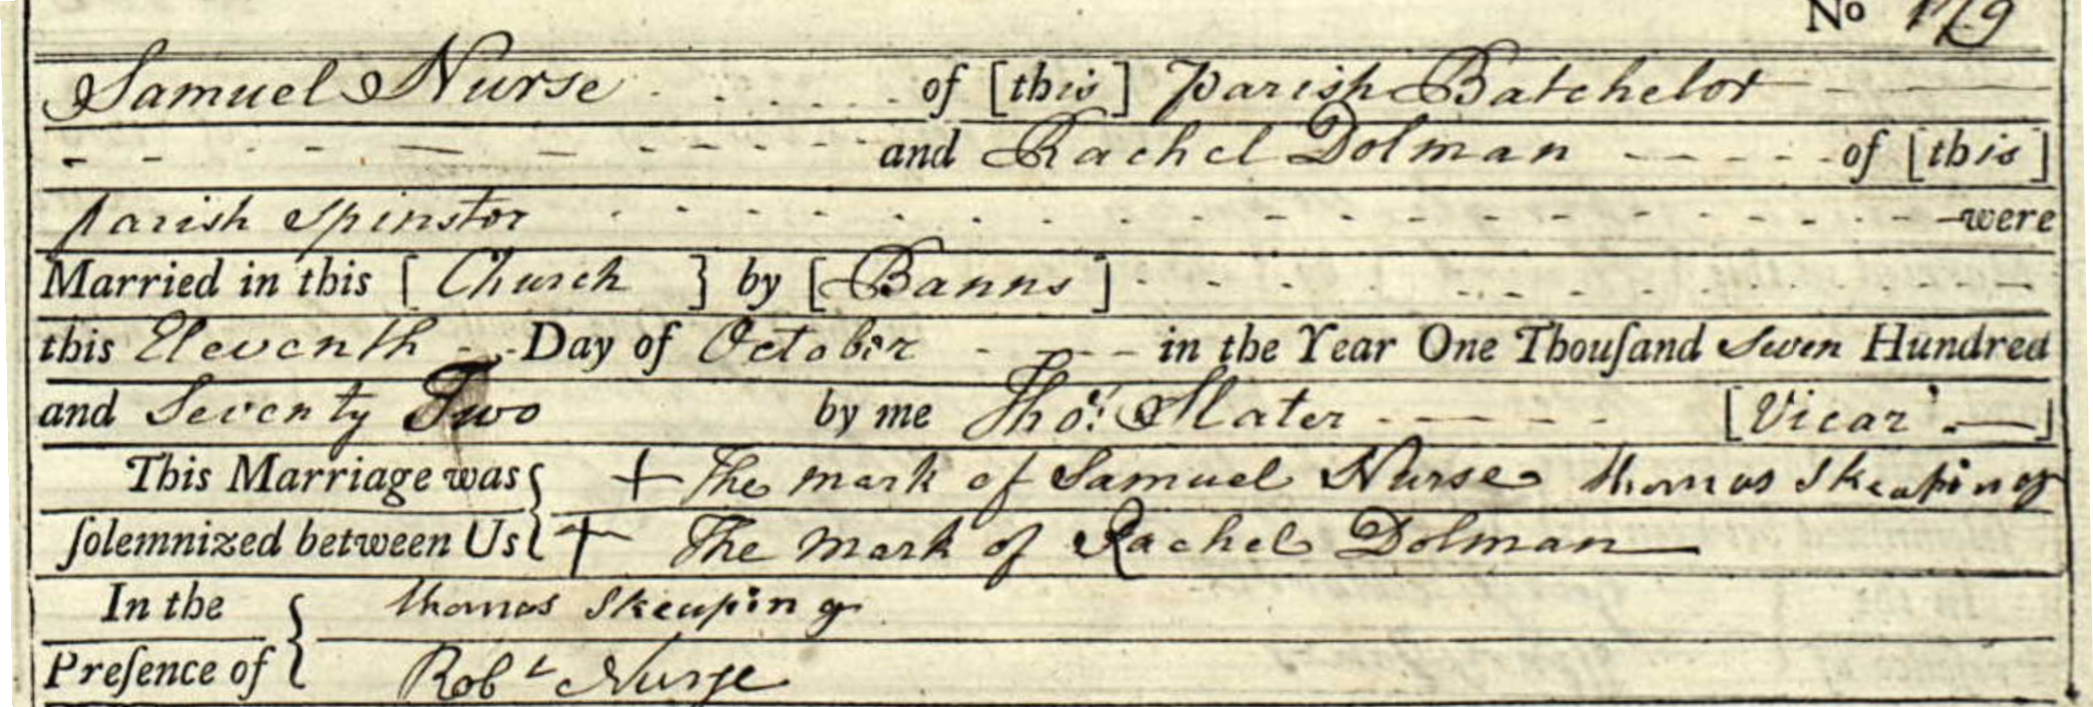 Figure 1: The Marriage Register entry for Samuel Nurse and Rachel Dolman